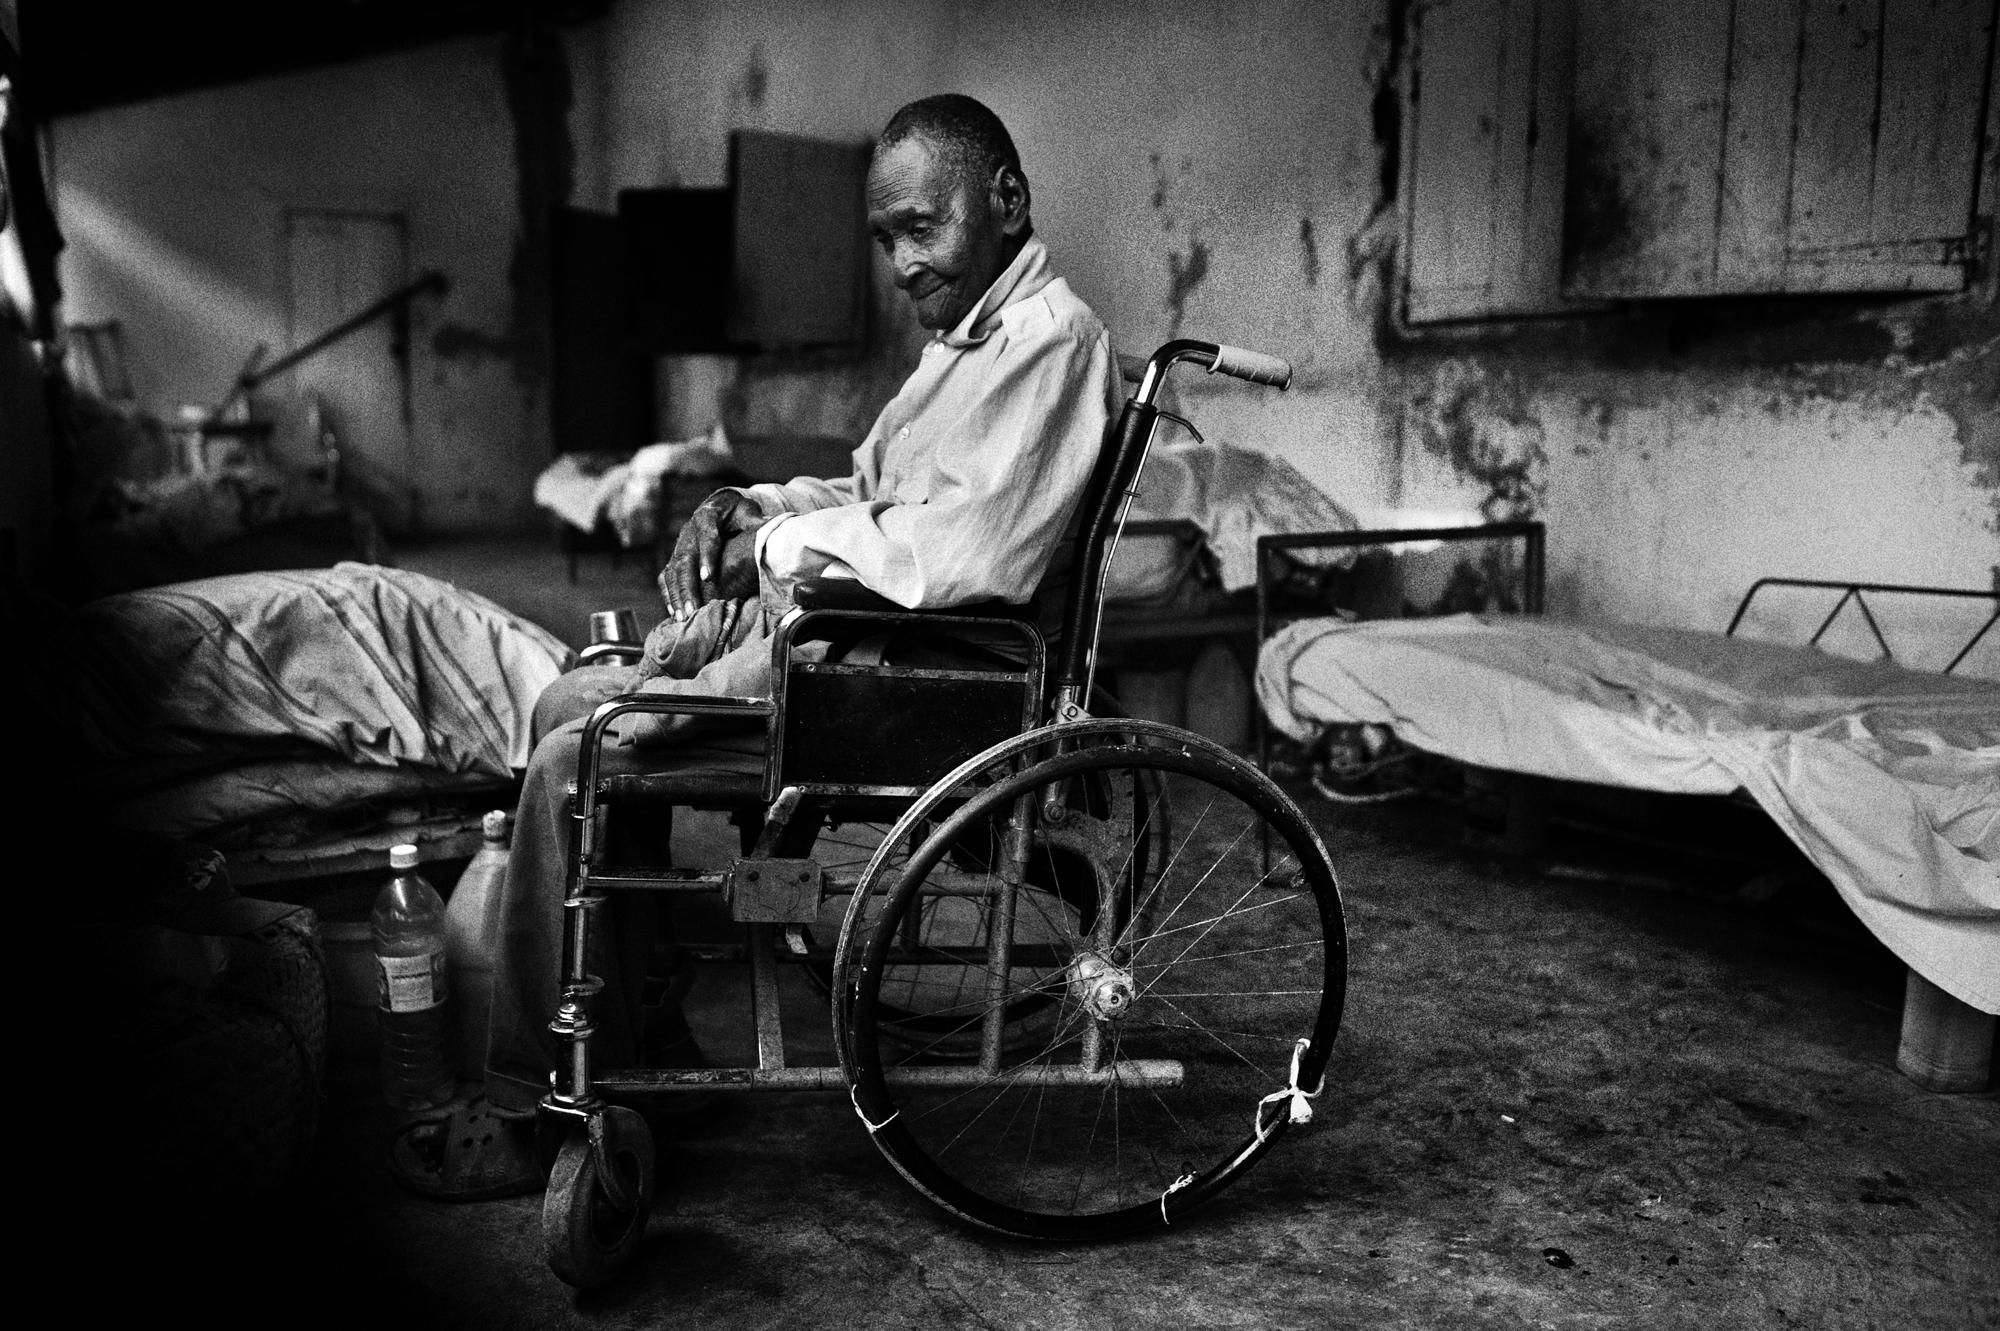 Hospice/ Haiti - Petit Guave, Haiti.
June 2010.
Portrait of an inmate on...